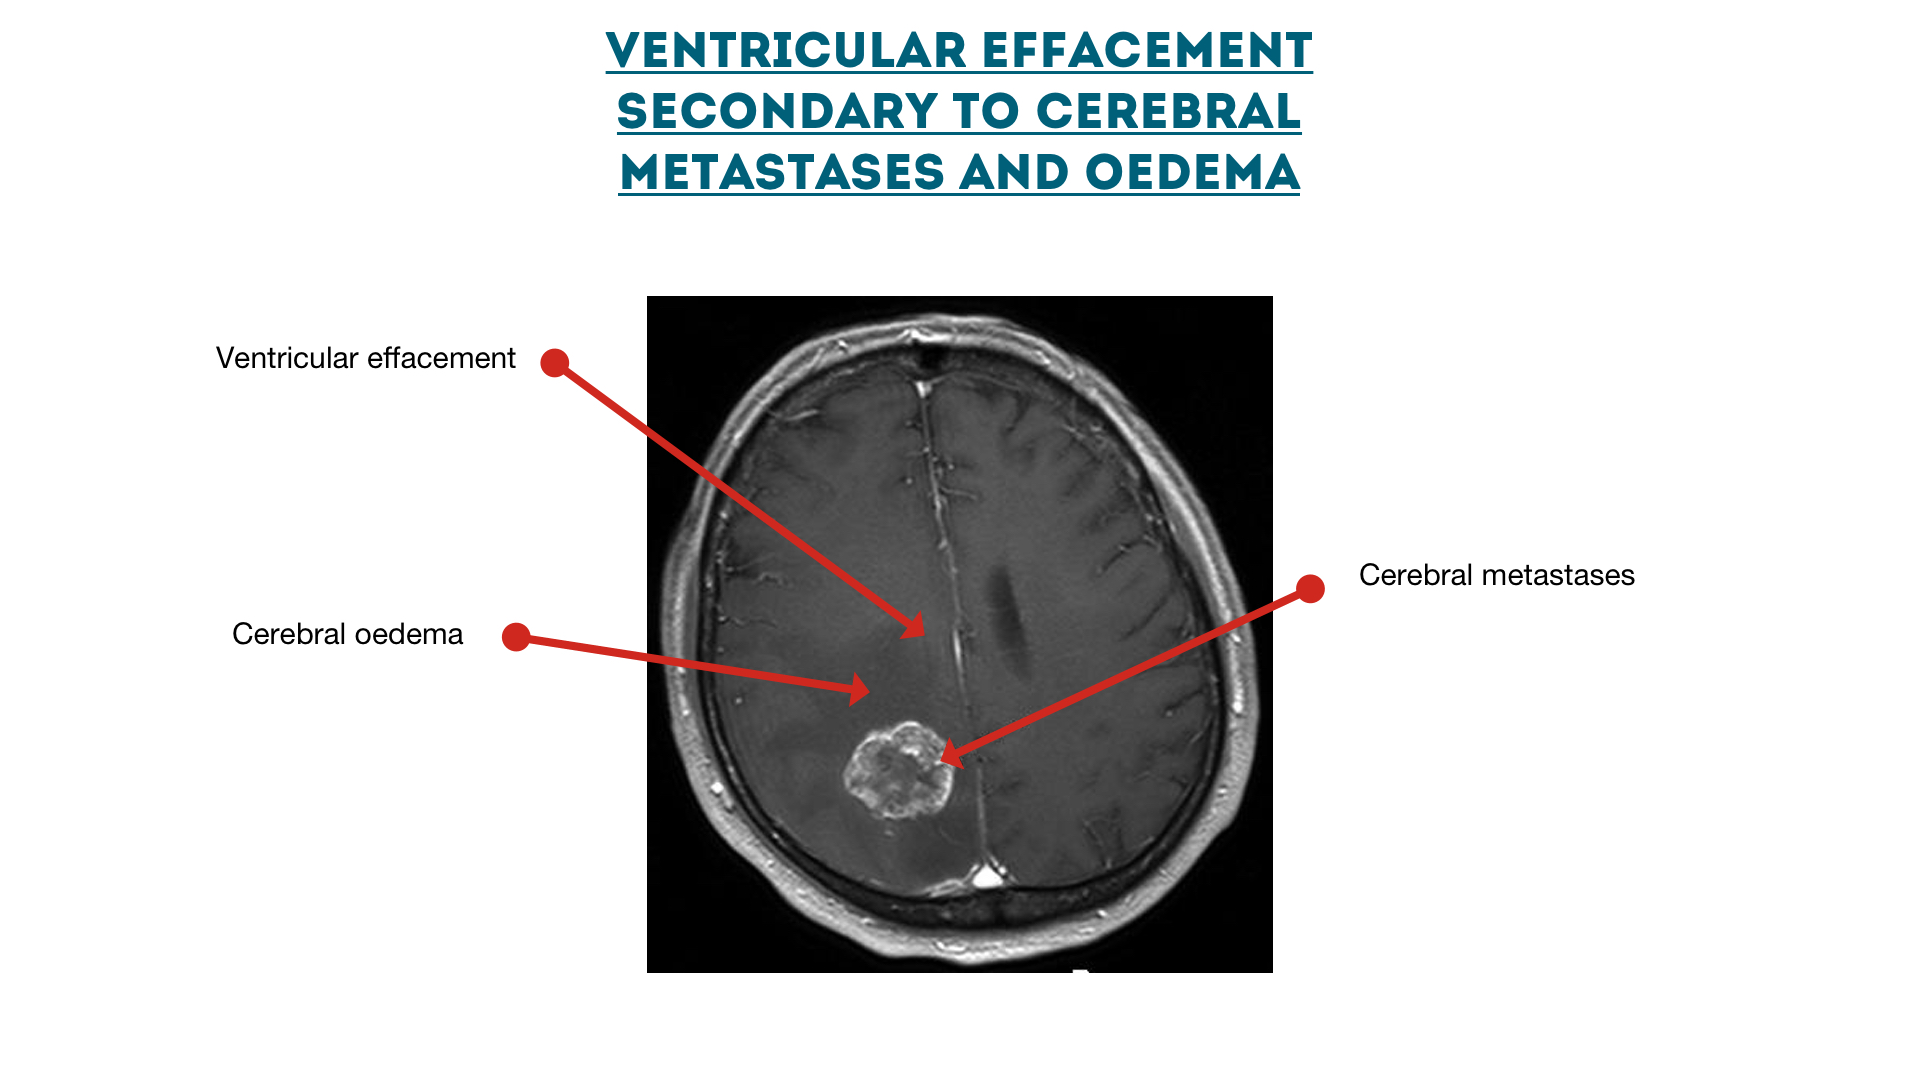 Figure 17 : Ventricular effacement secondary to cerebral metastases